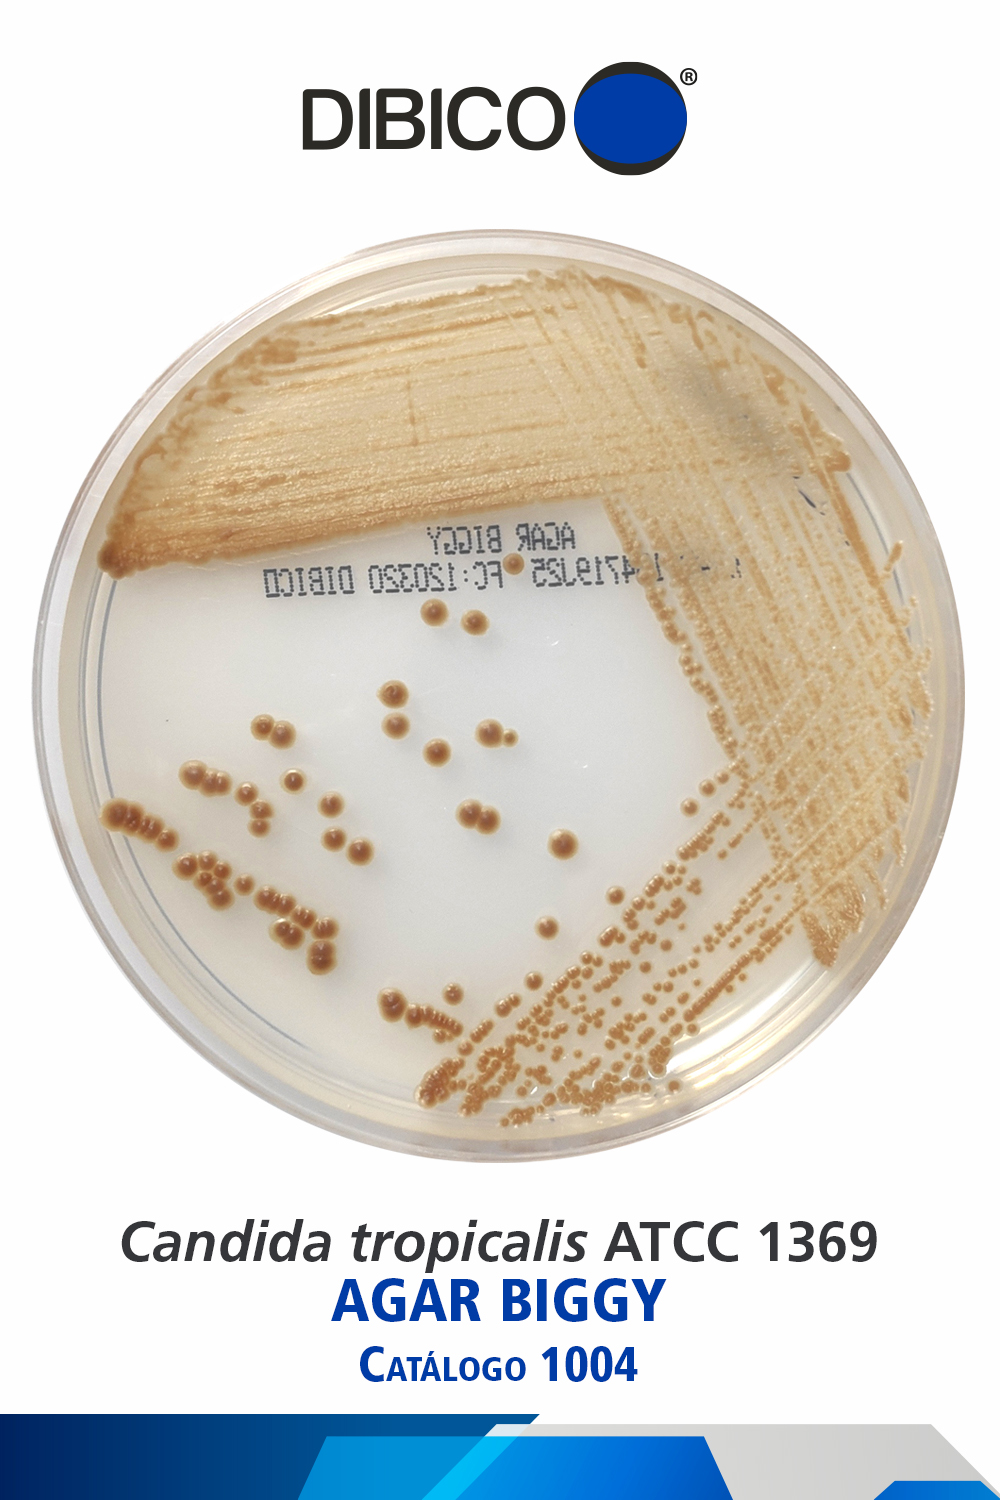 Candida tropicalis ATCC 1369 Cat. 1004